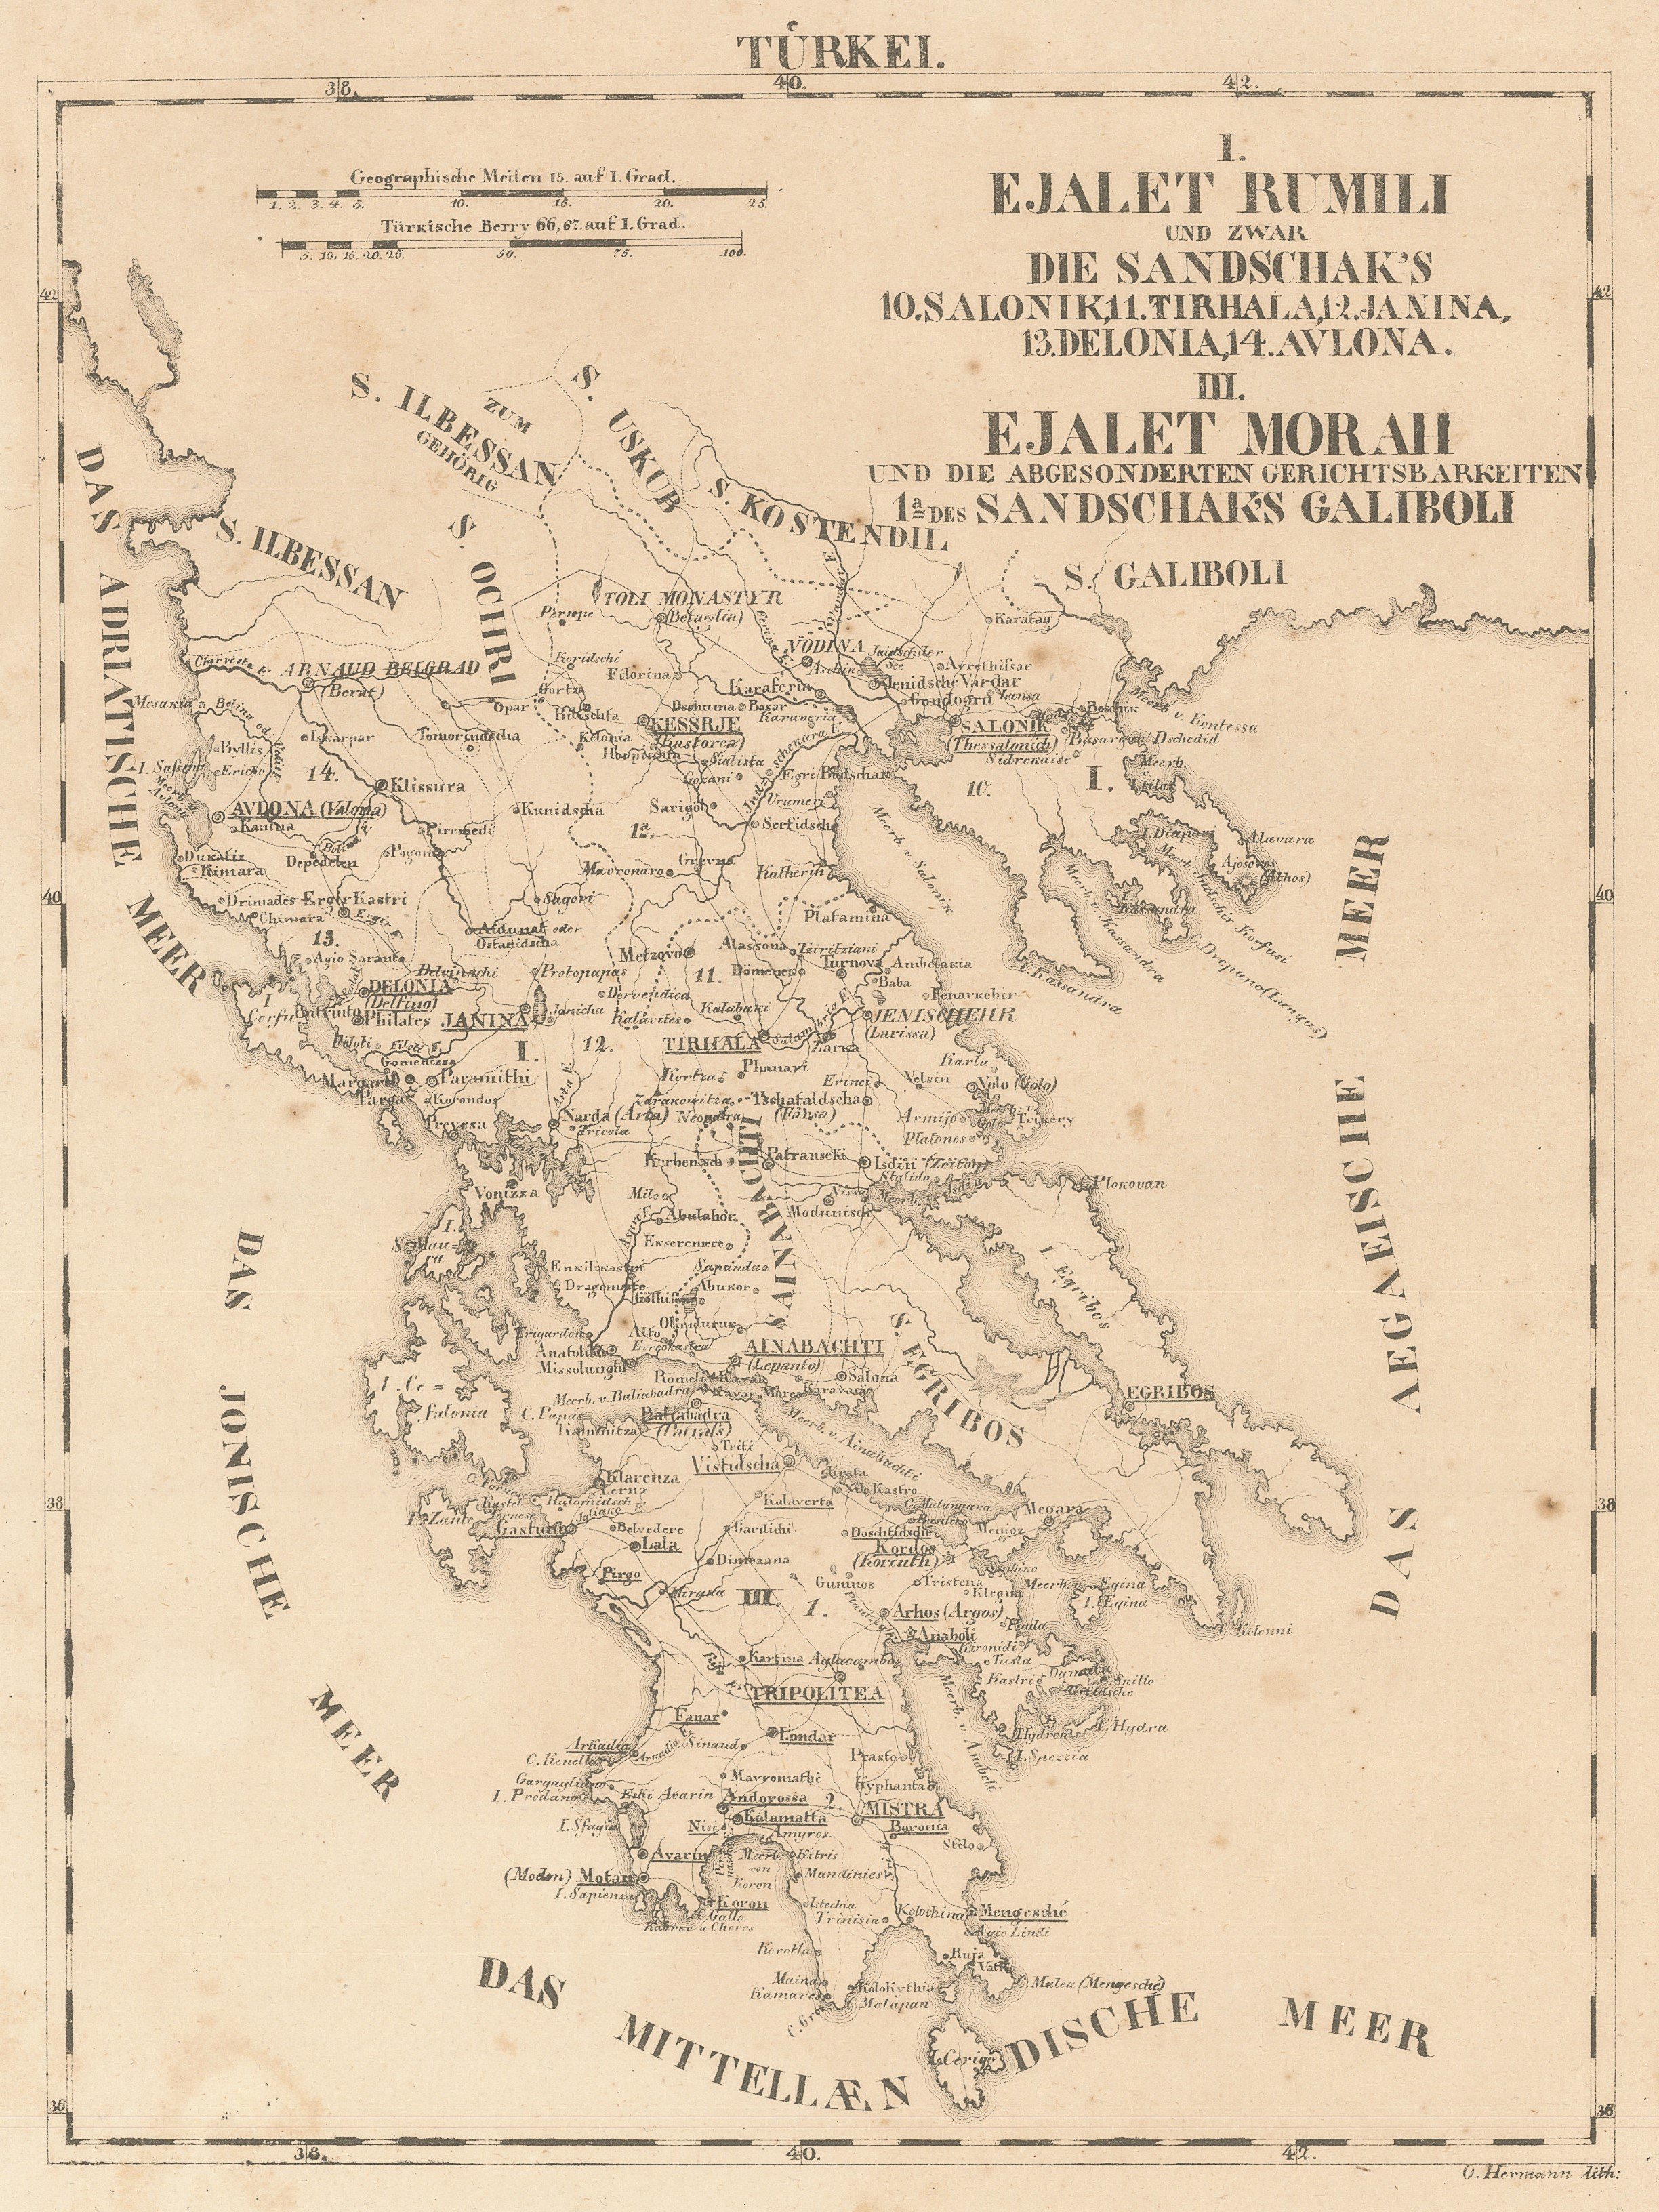 GEORGE MATTHAEUS SEUTTER. ΑΟΥΓΚΣΜΠΟΥΡΓΚ  1730. Χάρτης με τίτλο «Ελλάς, τμήμα βόρειο», όπου στο κέντρο αυτής της περιοχής βρίσκεται η Μακεδονία κατά την πρώτη ρωμαϊκή περίοδο (168 π.Χ.- 148 π.Χ.) με τις 4 μερίδες. (Ιδιωτική Συλλογή)